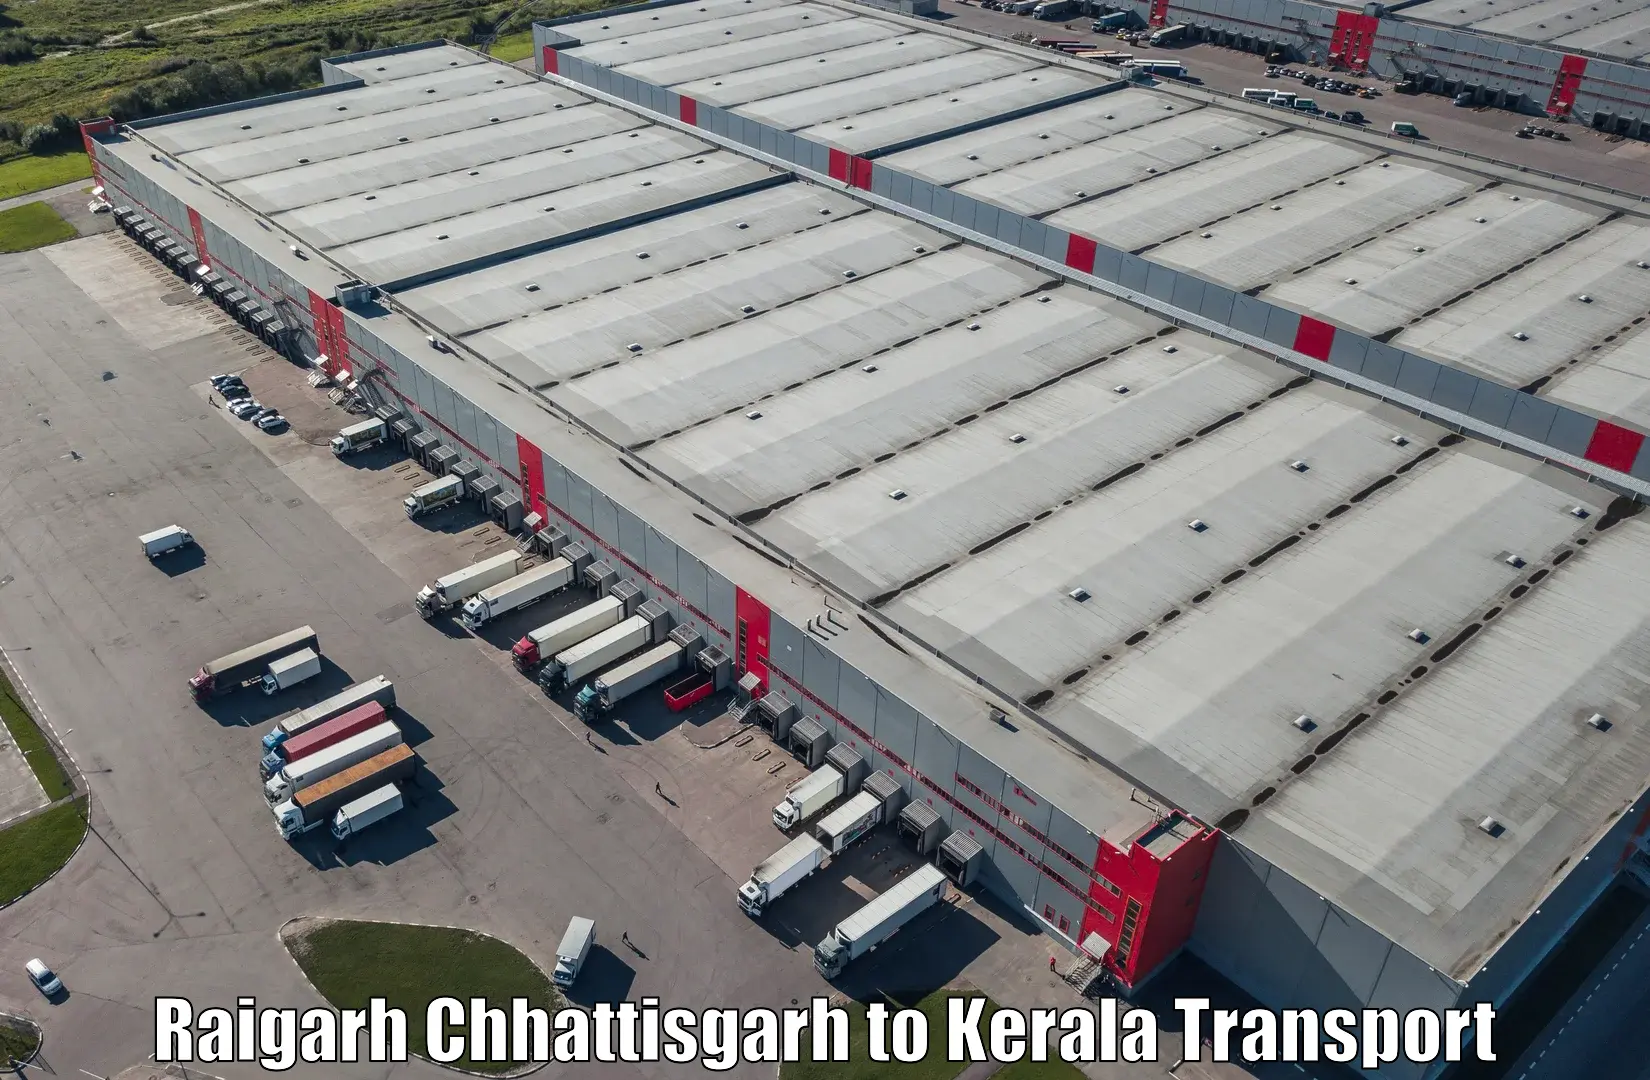 Pick up transport service in Raigarh Chhattisgarh to Palakkad